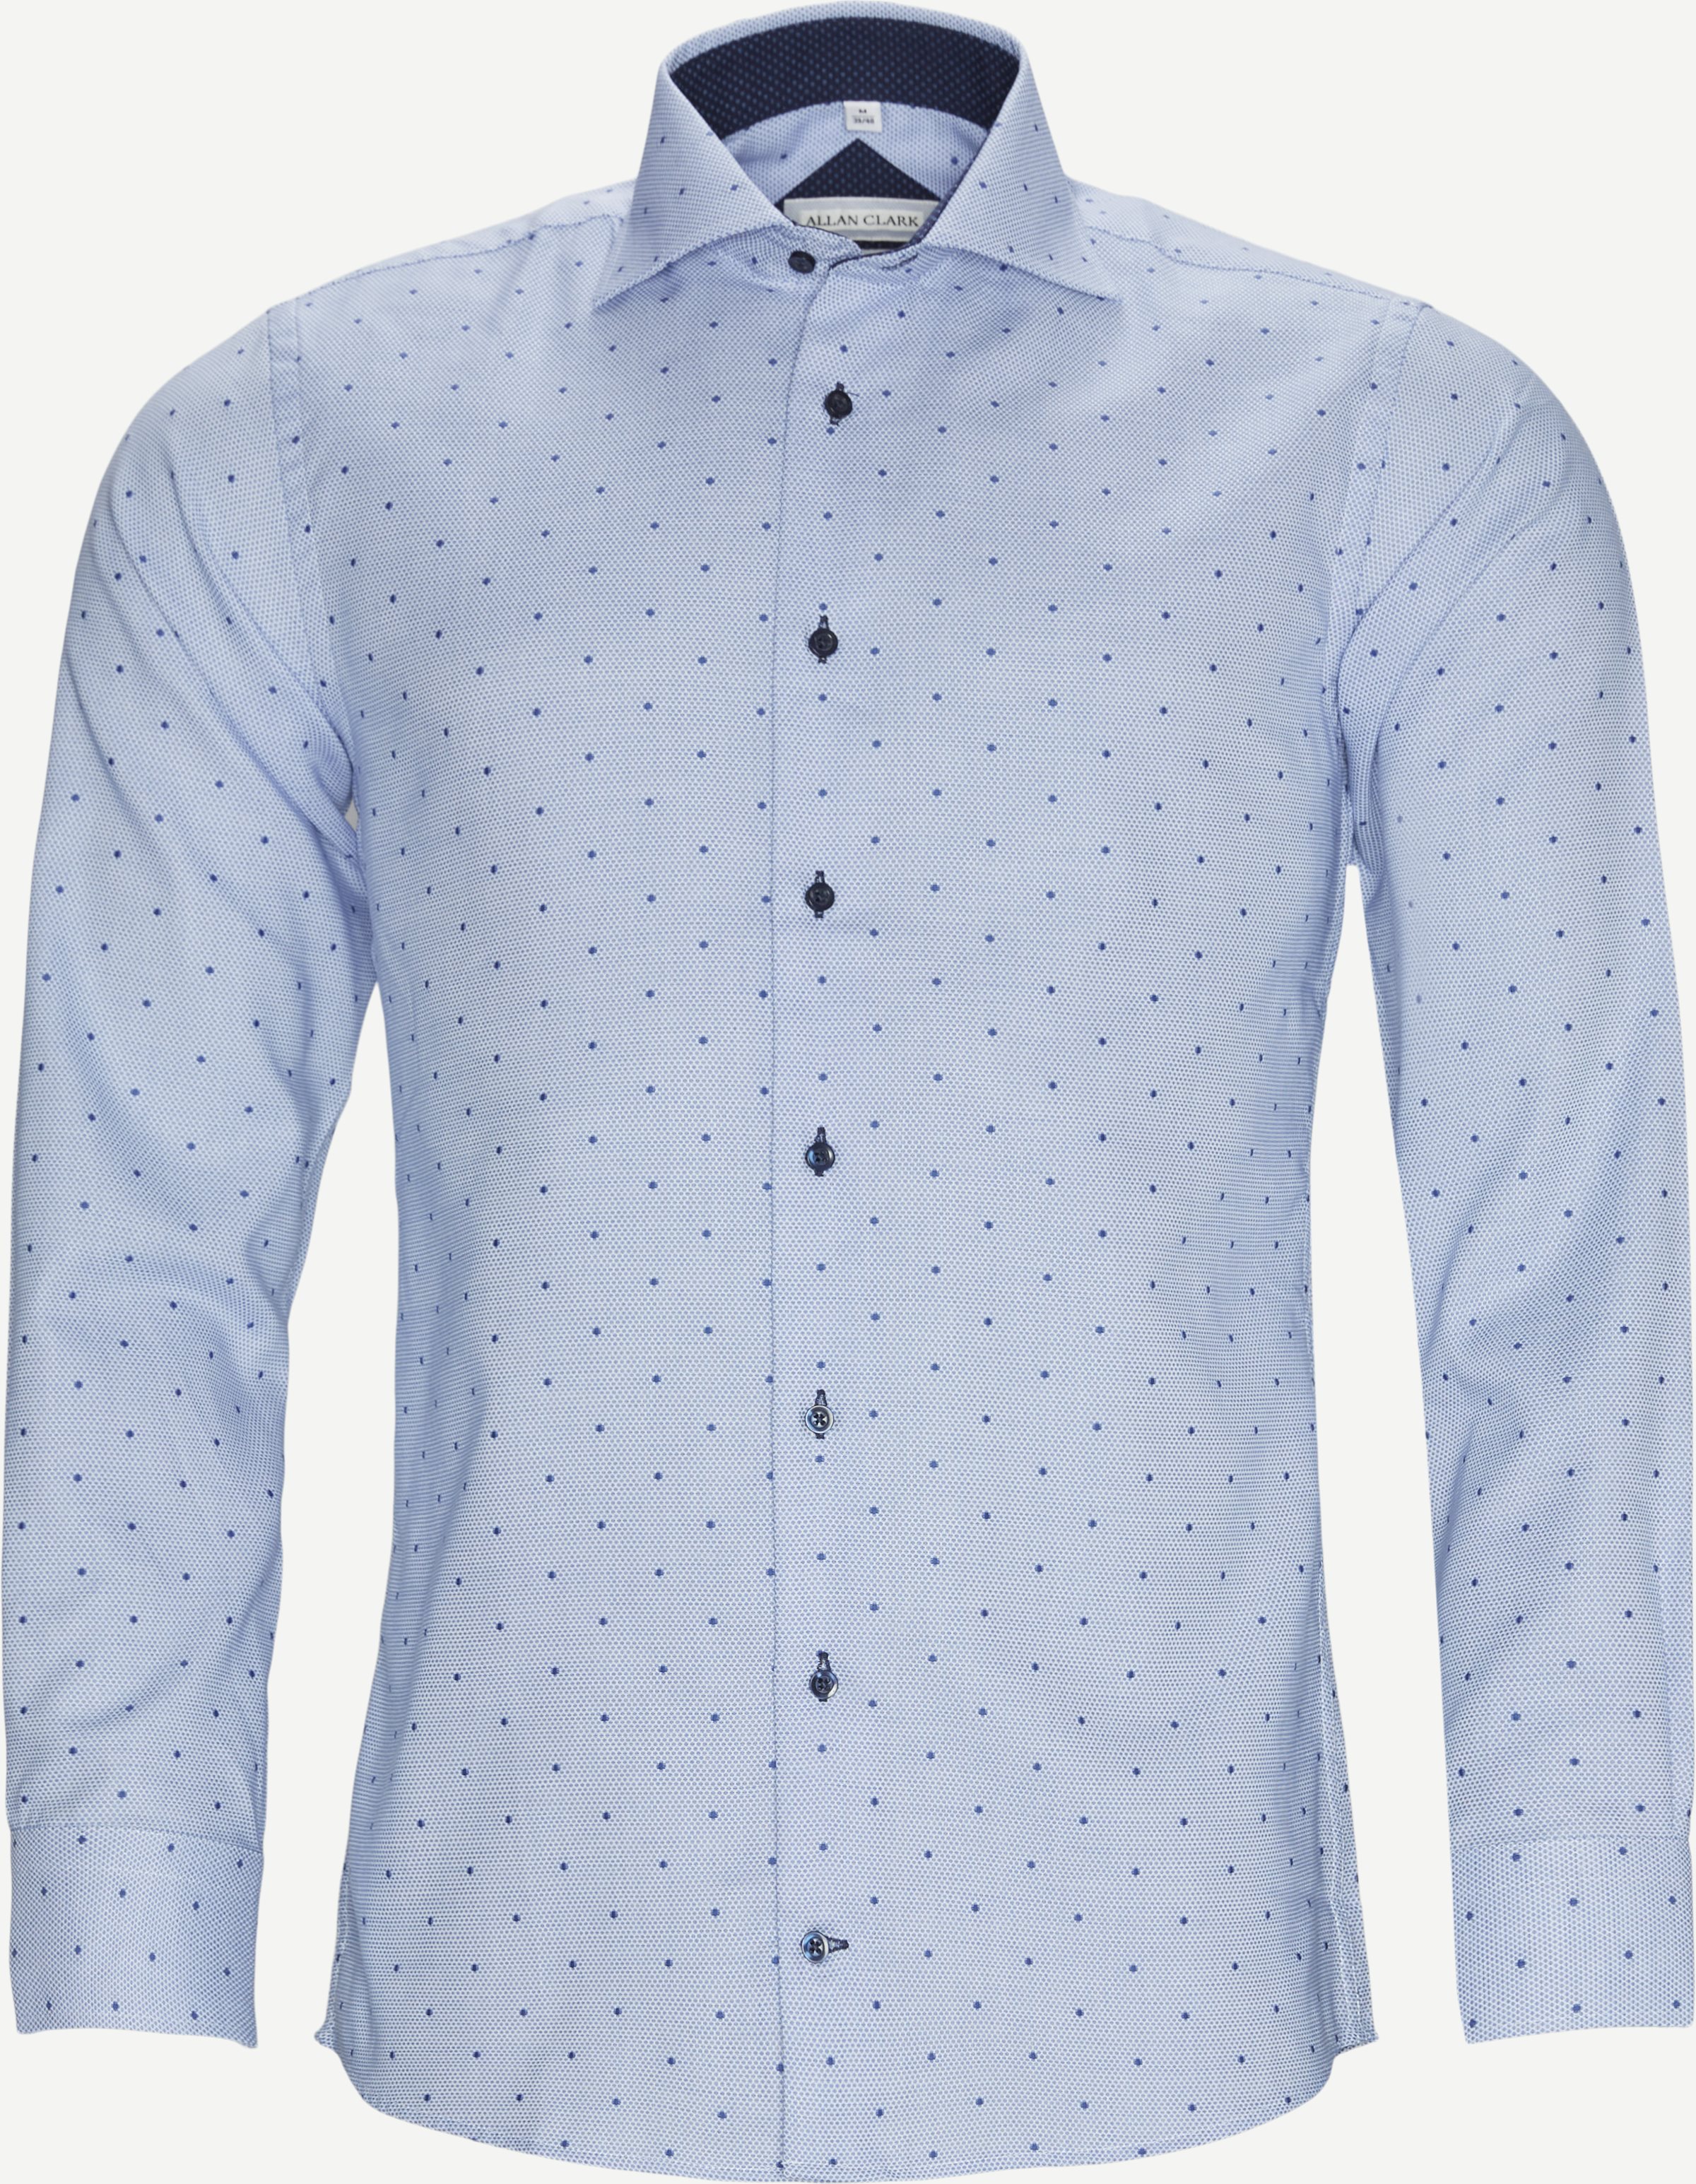 Balmoral skjorta - Skjortor - Blå